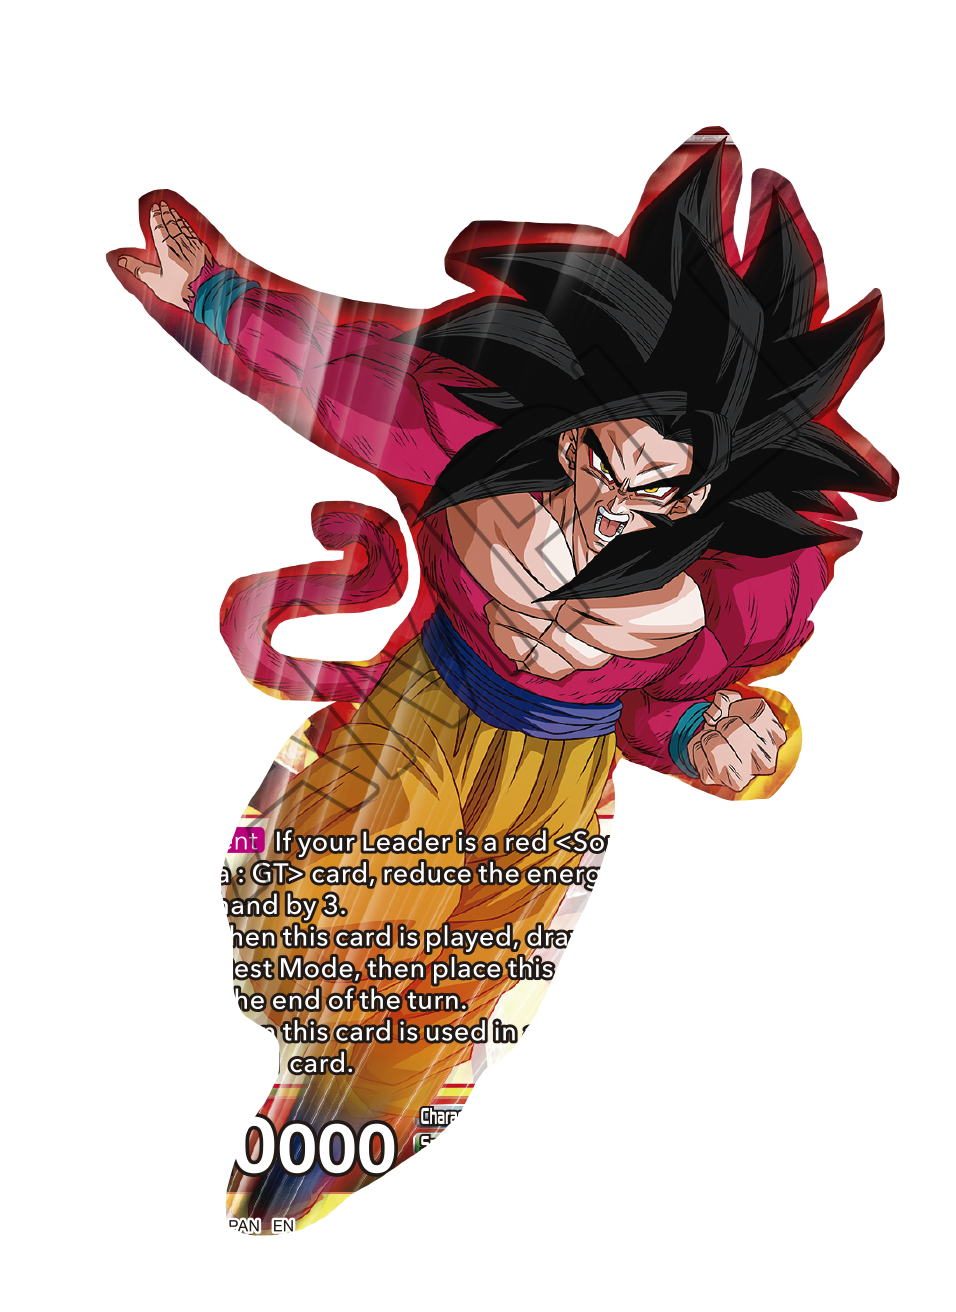 Goku Super Saiyajin 4 by Robzap18 on DeviantArt